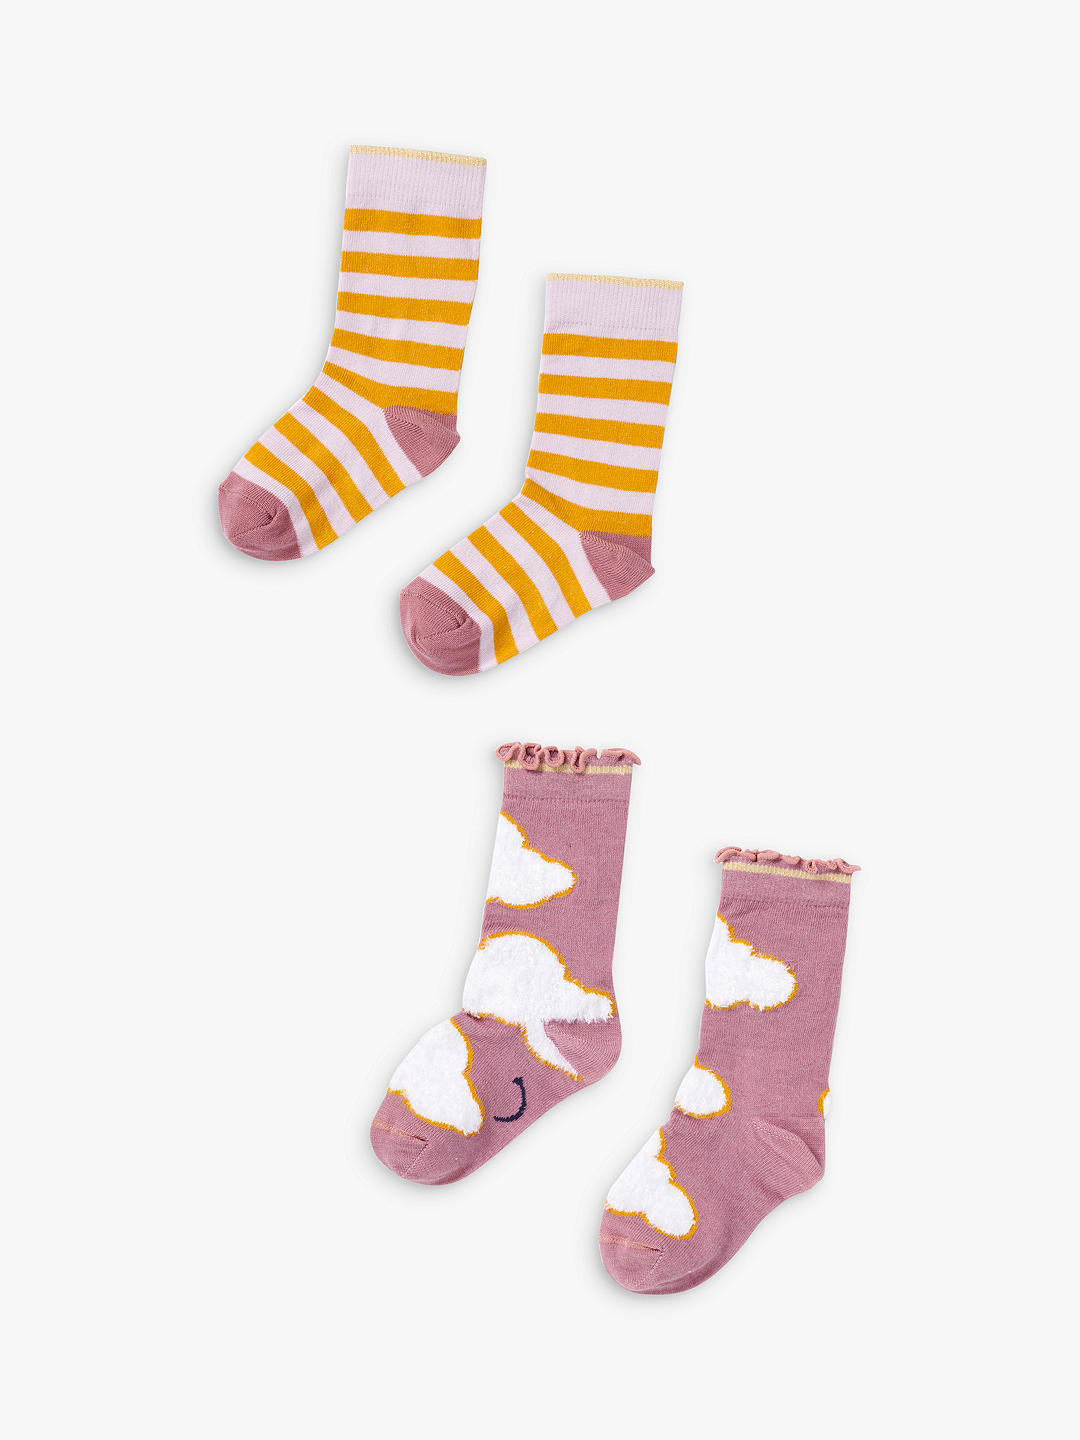 Stych Kids' Cloud & Stripe Socks, Pack of 2, Multi at John Lewis & Partners